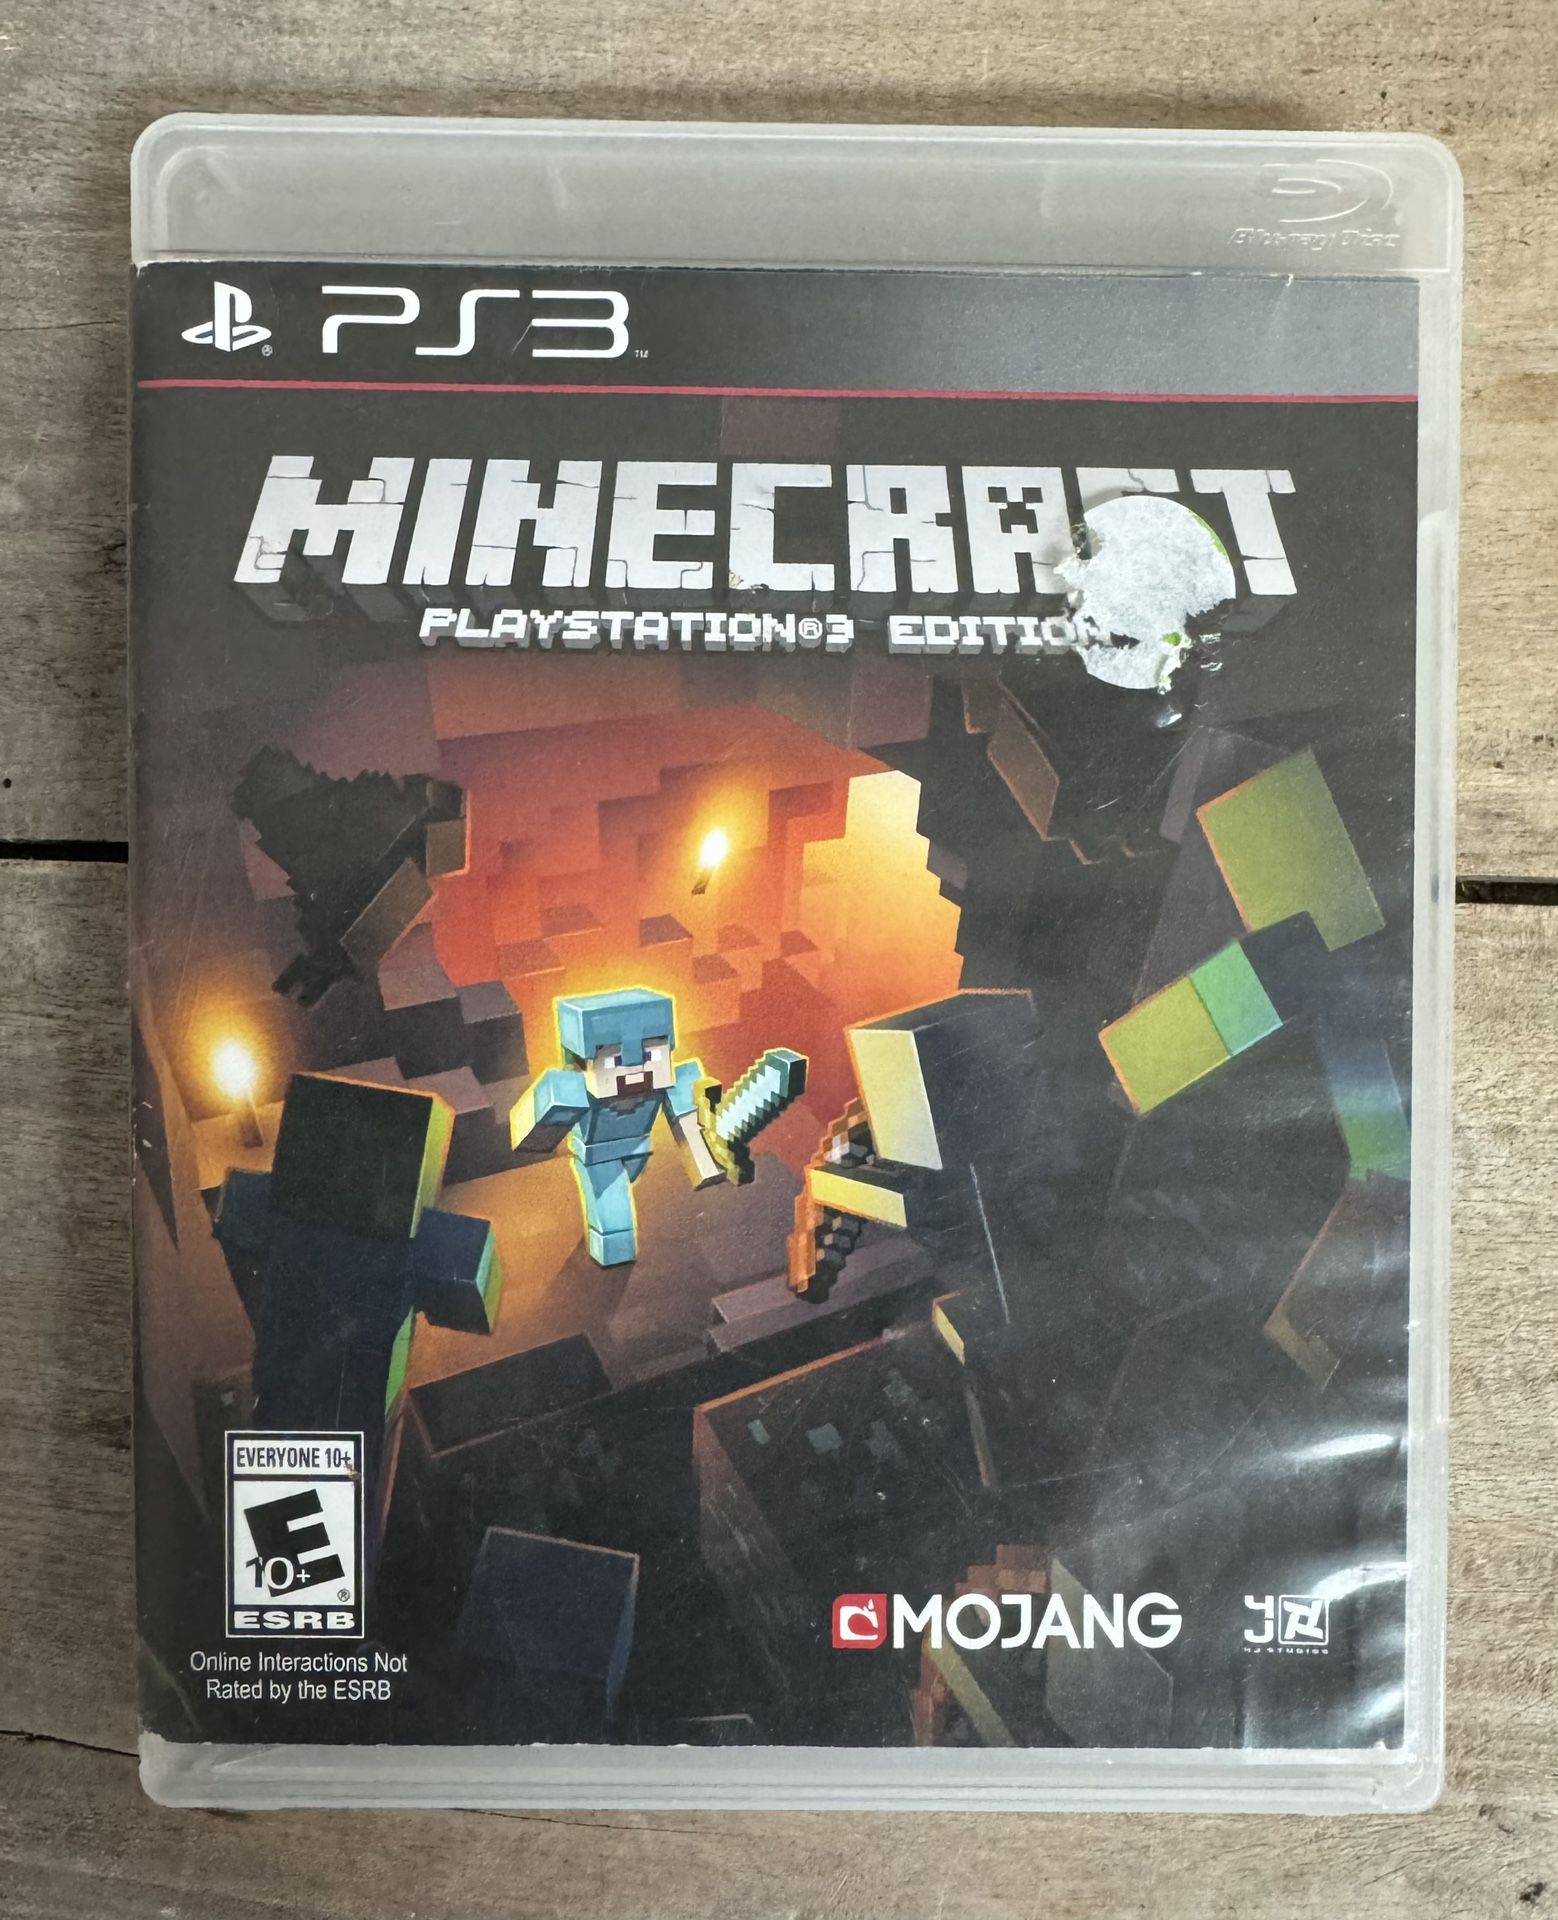 PlayStation PS3 Minecraft Game just $10 xox